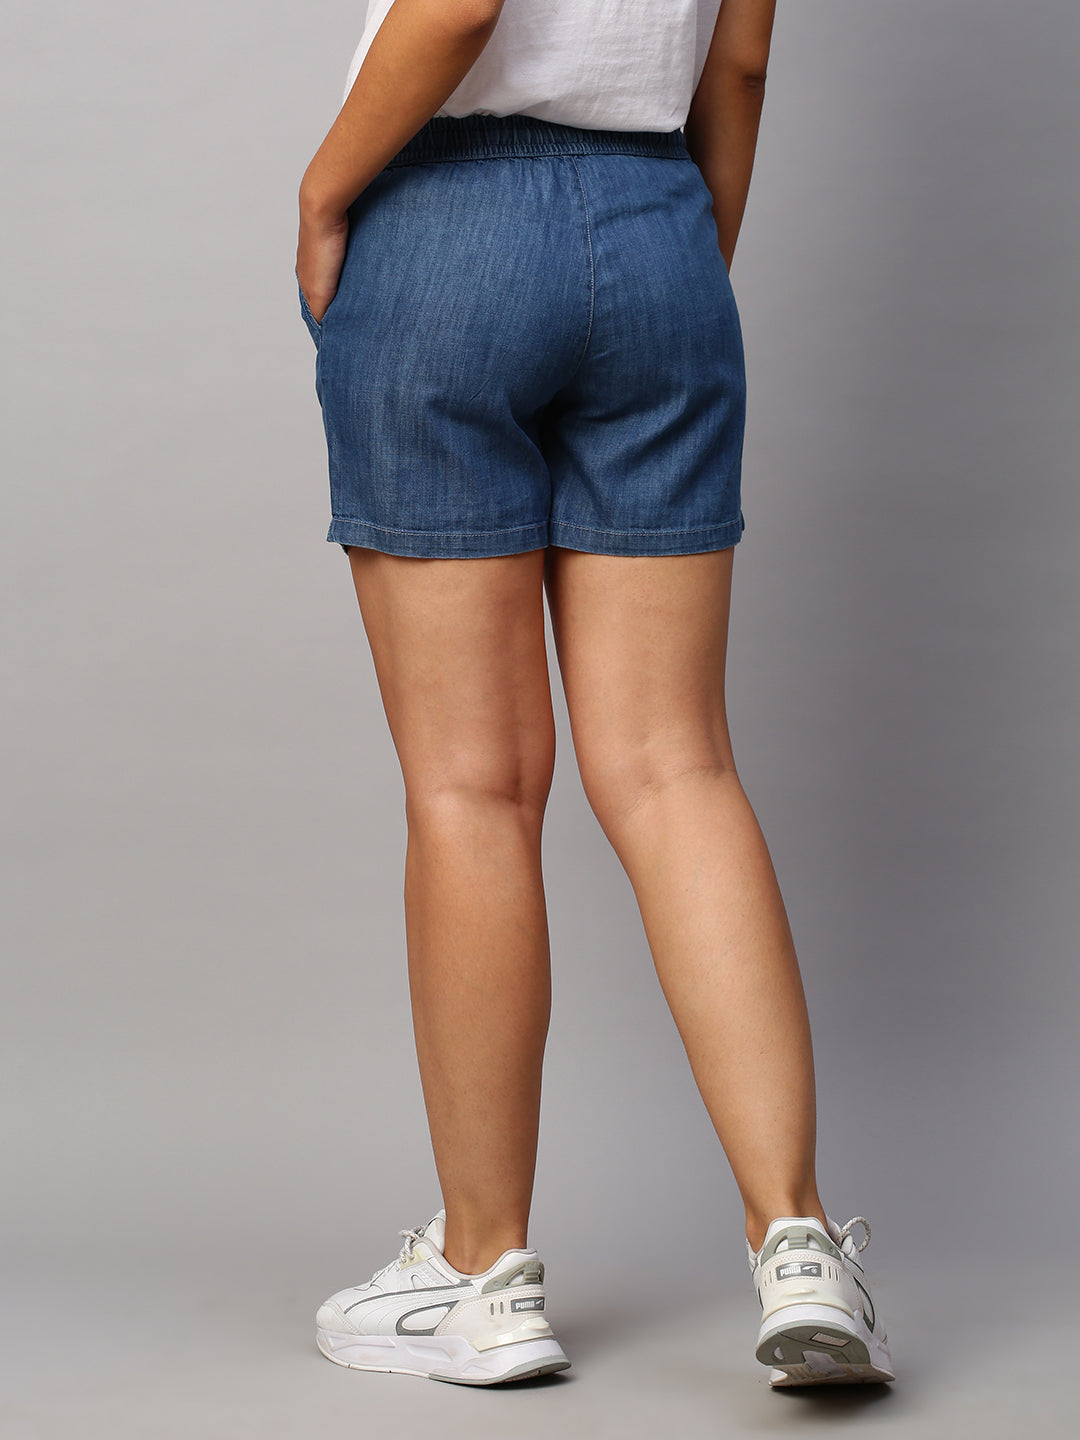 Cotton Regular Fit Ladies Hot Pant Shorts, Waist Size: 30.0